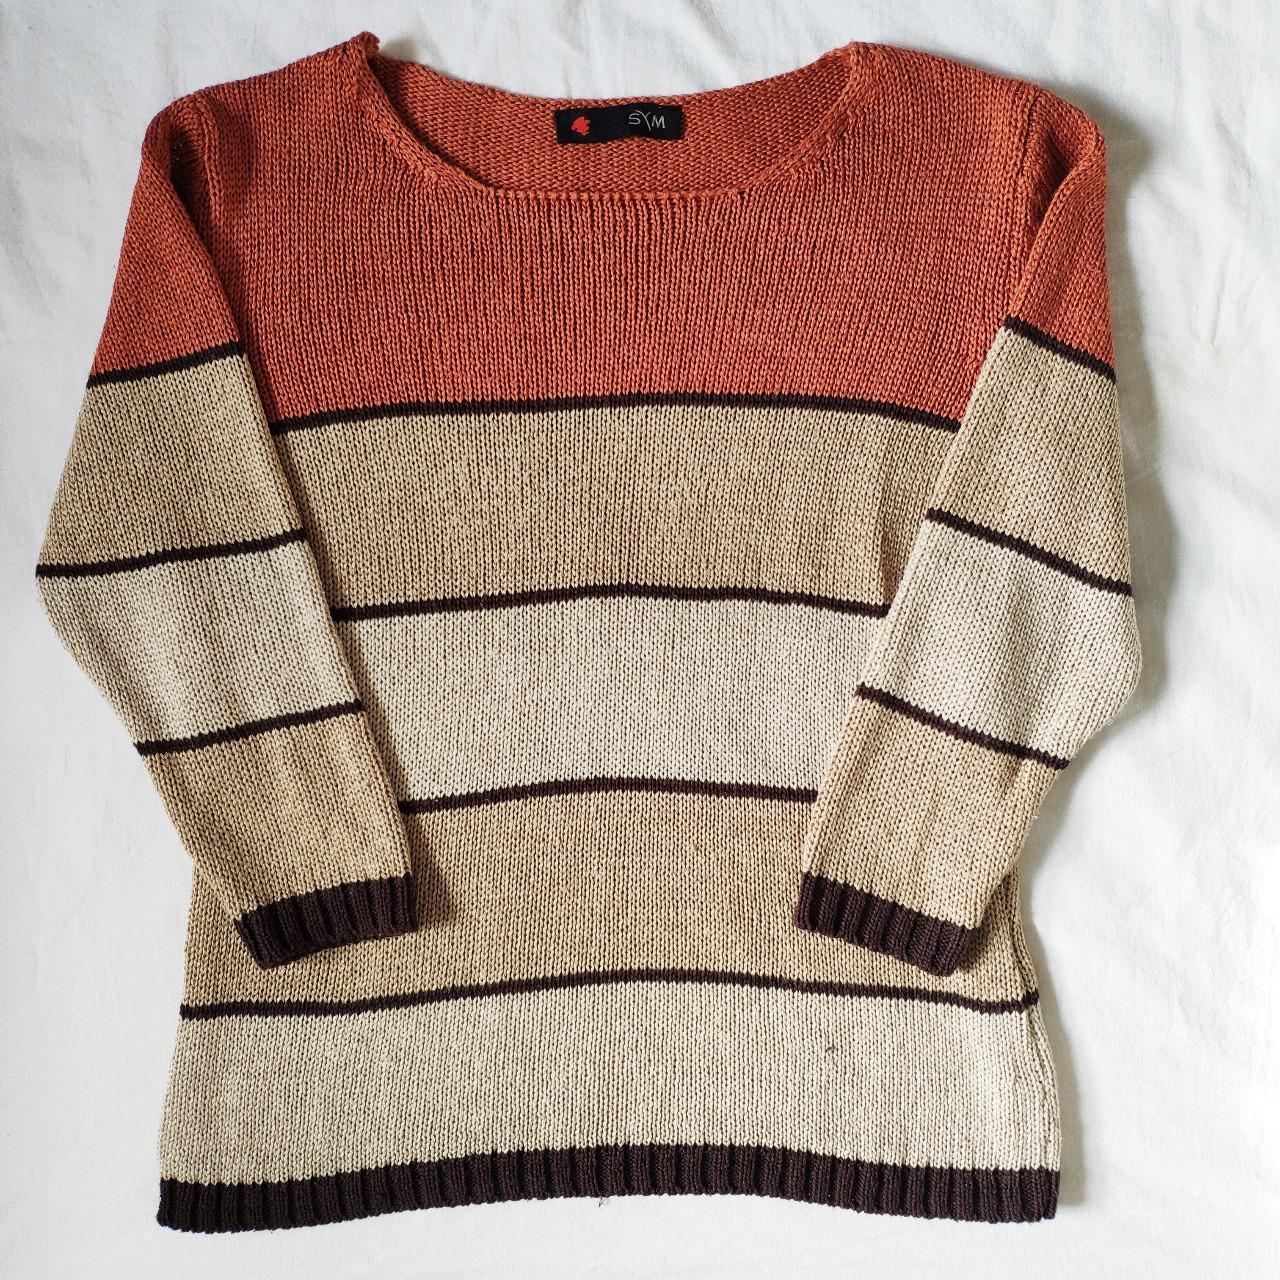 vintage autumn jumper 🍂🍂 thin knit top in burnt... - Depop